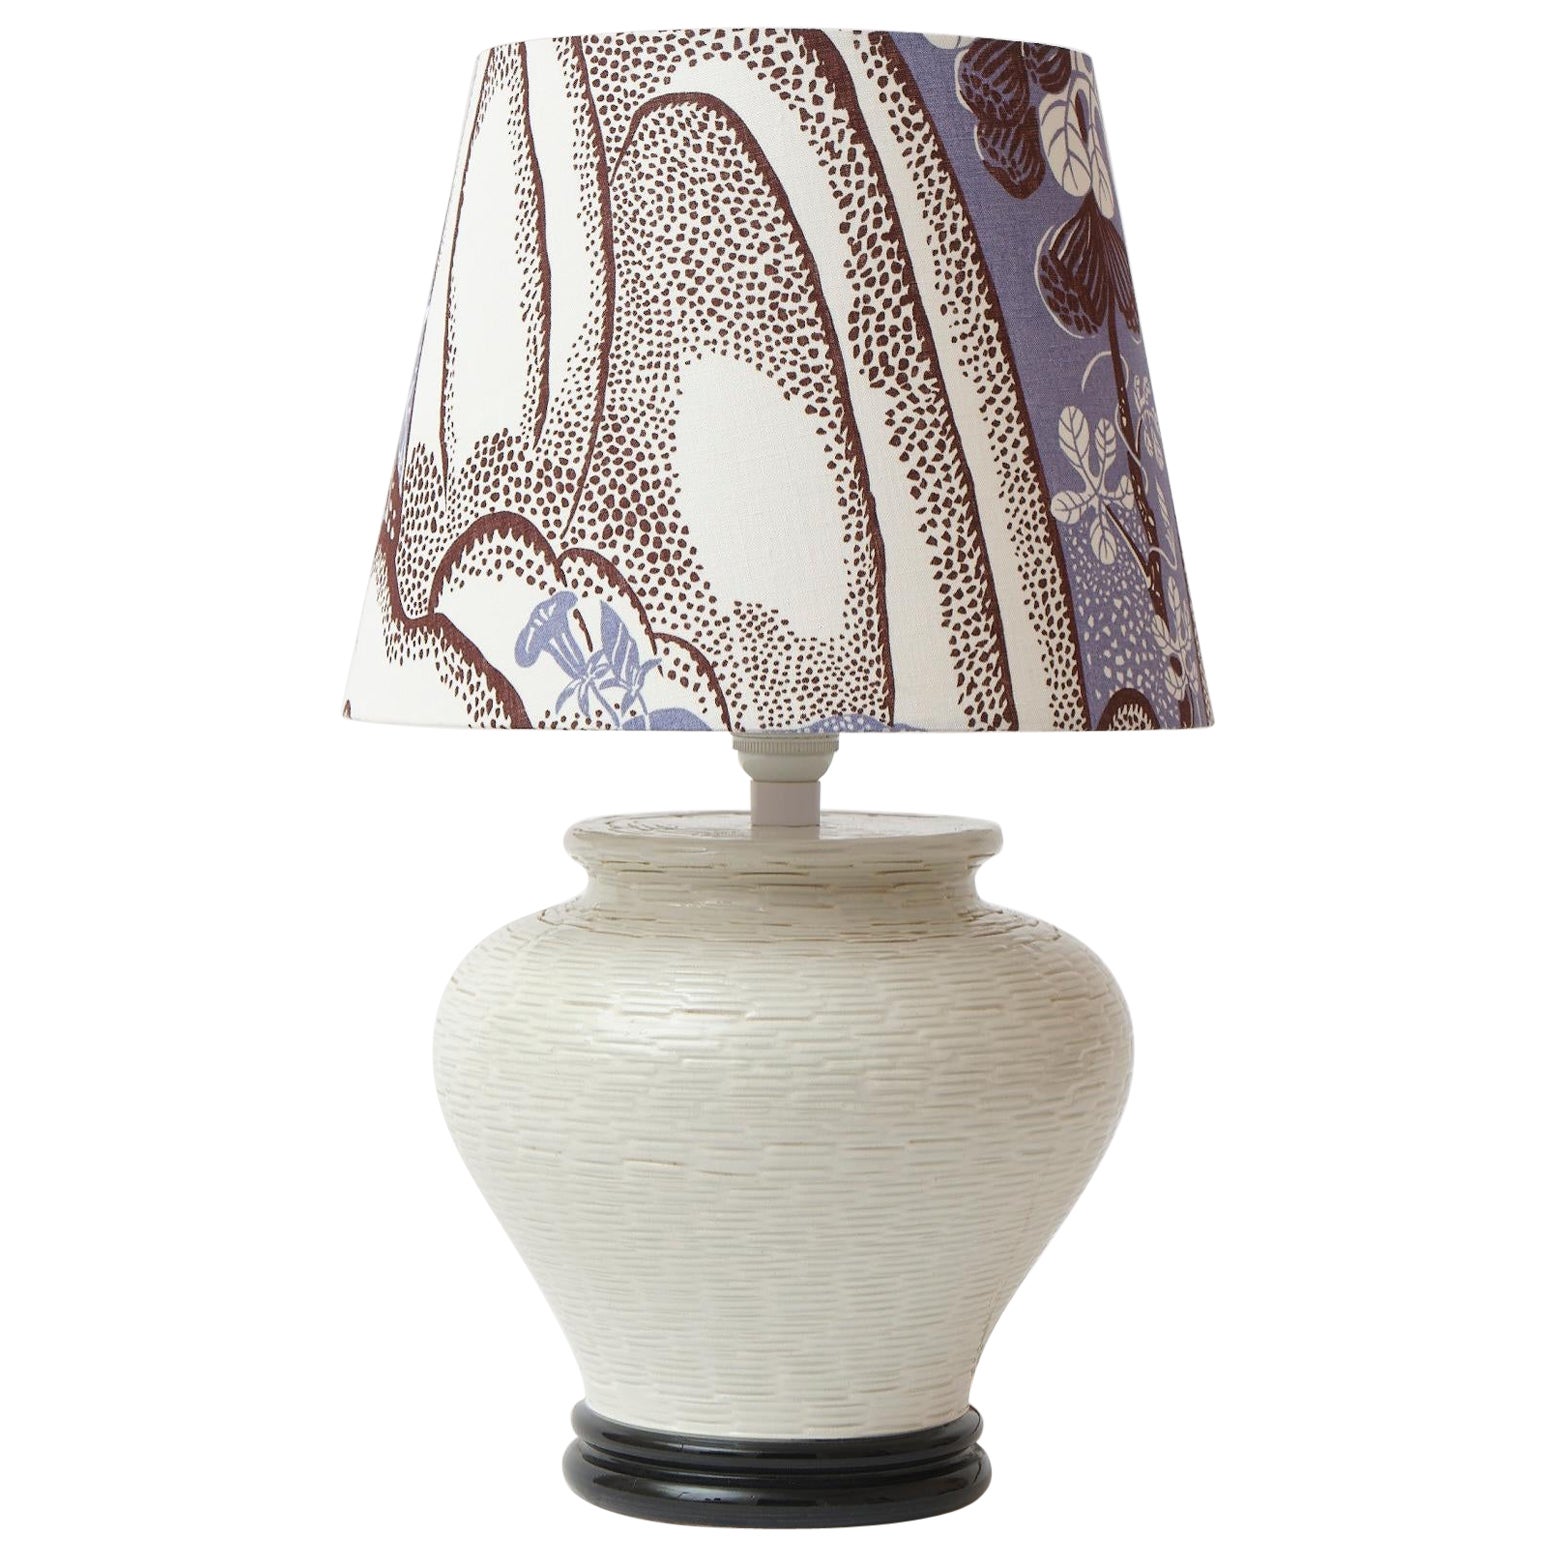 Vintage handmade Italian ceramic table lamp shade in vintage Josef Frank textile For Sale